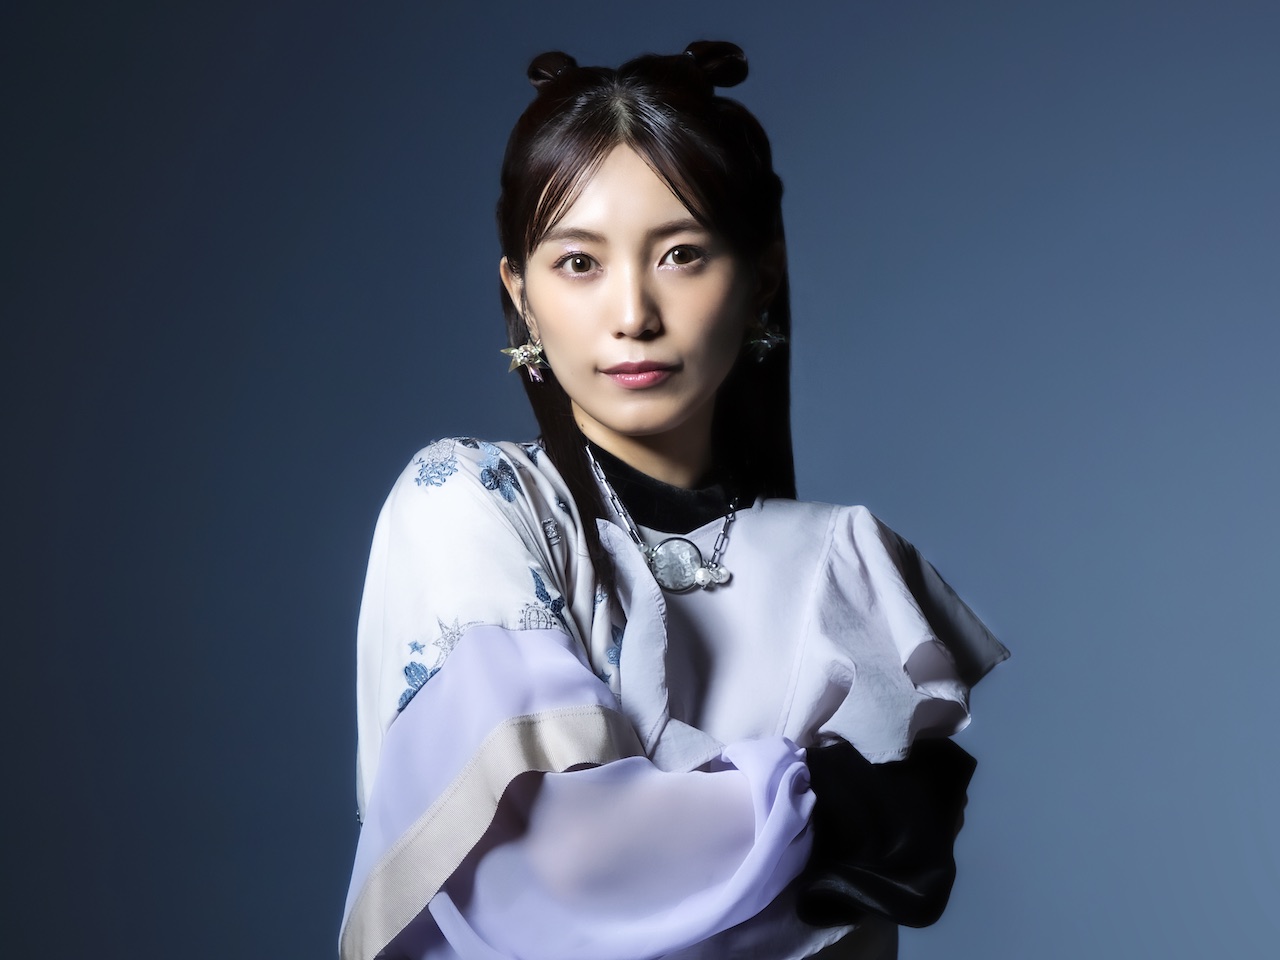 miwa、女性アーティスト初の"アコギ1本日本武道館2days"ライブ音源を配信リリース！